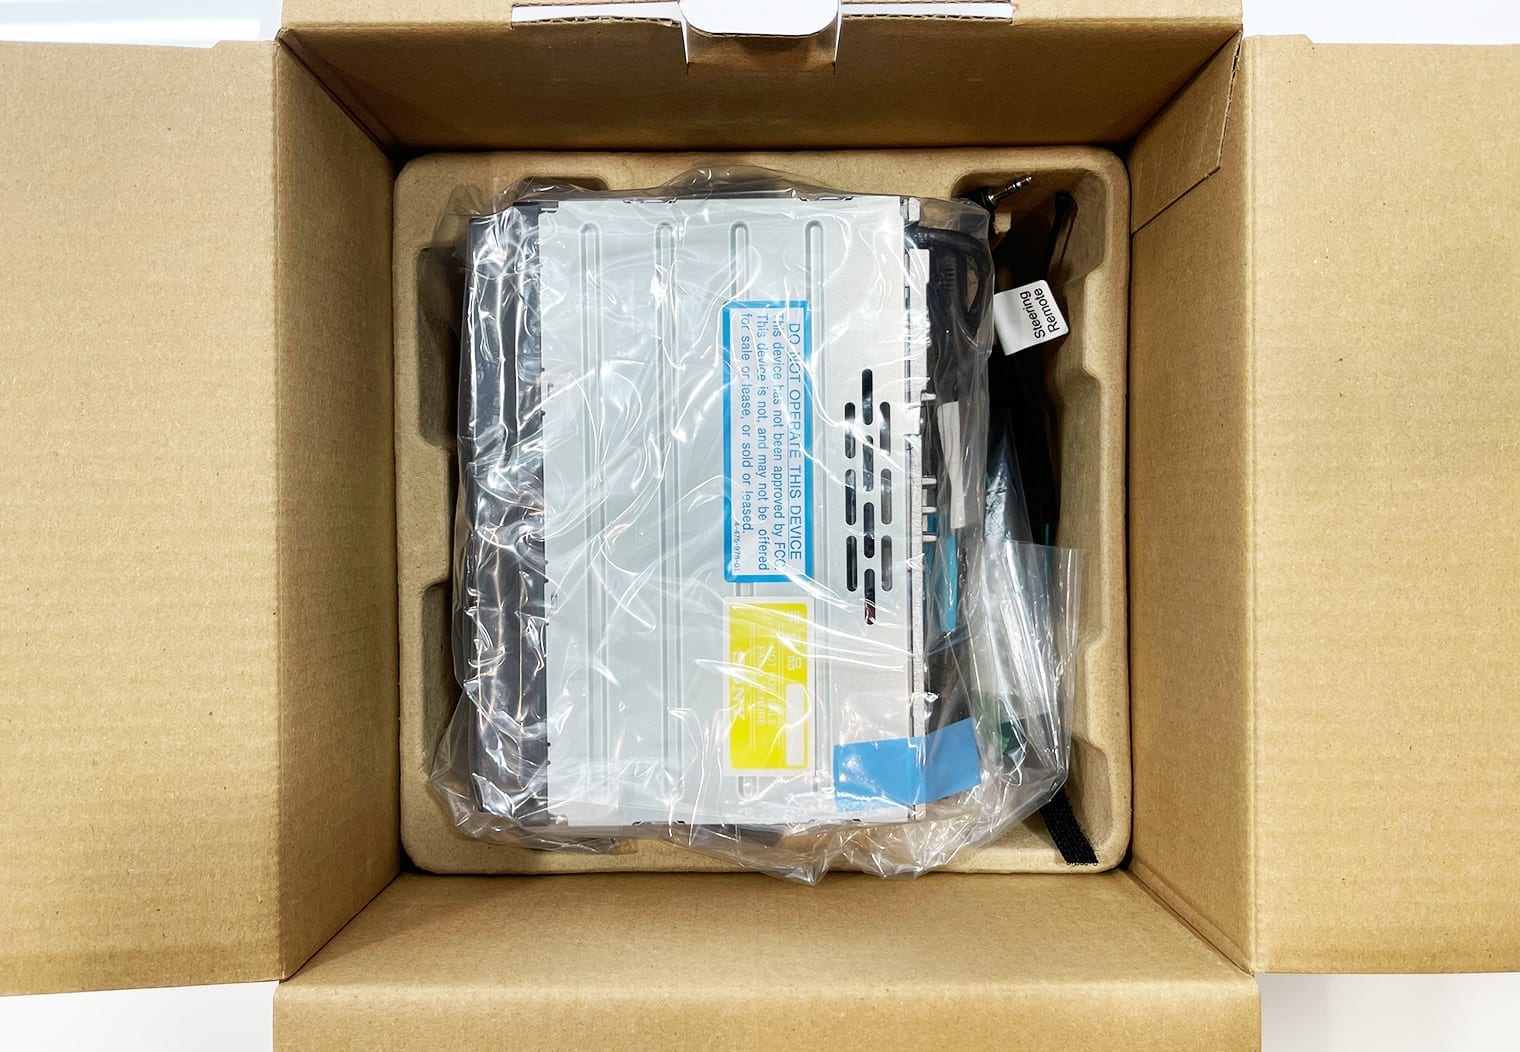 Sony XAV-AX5600 in box